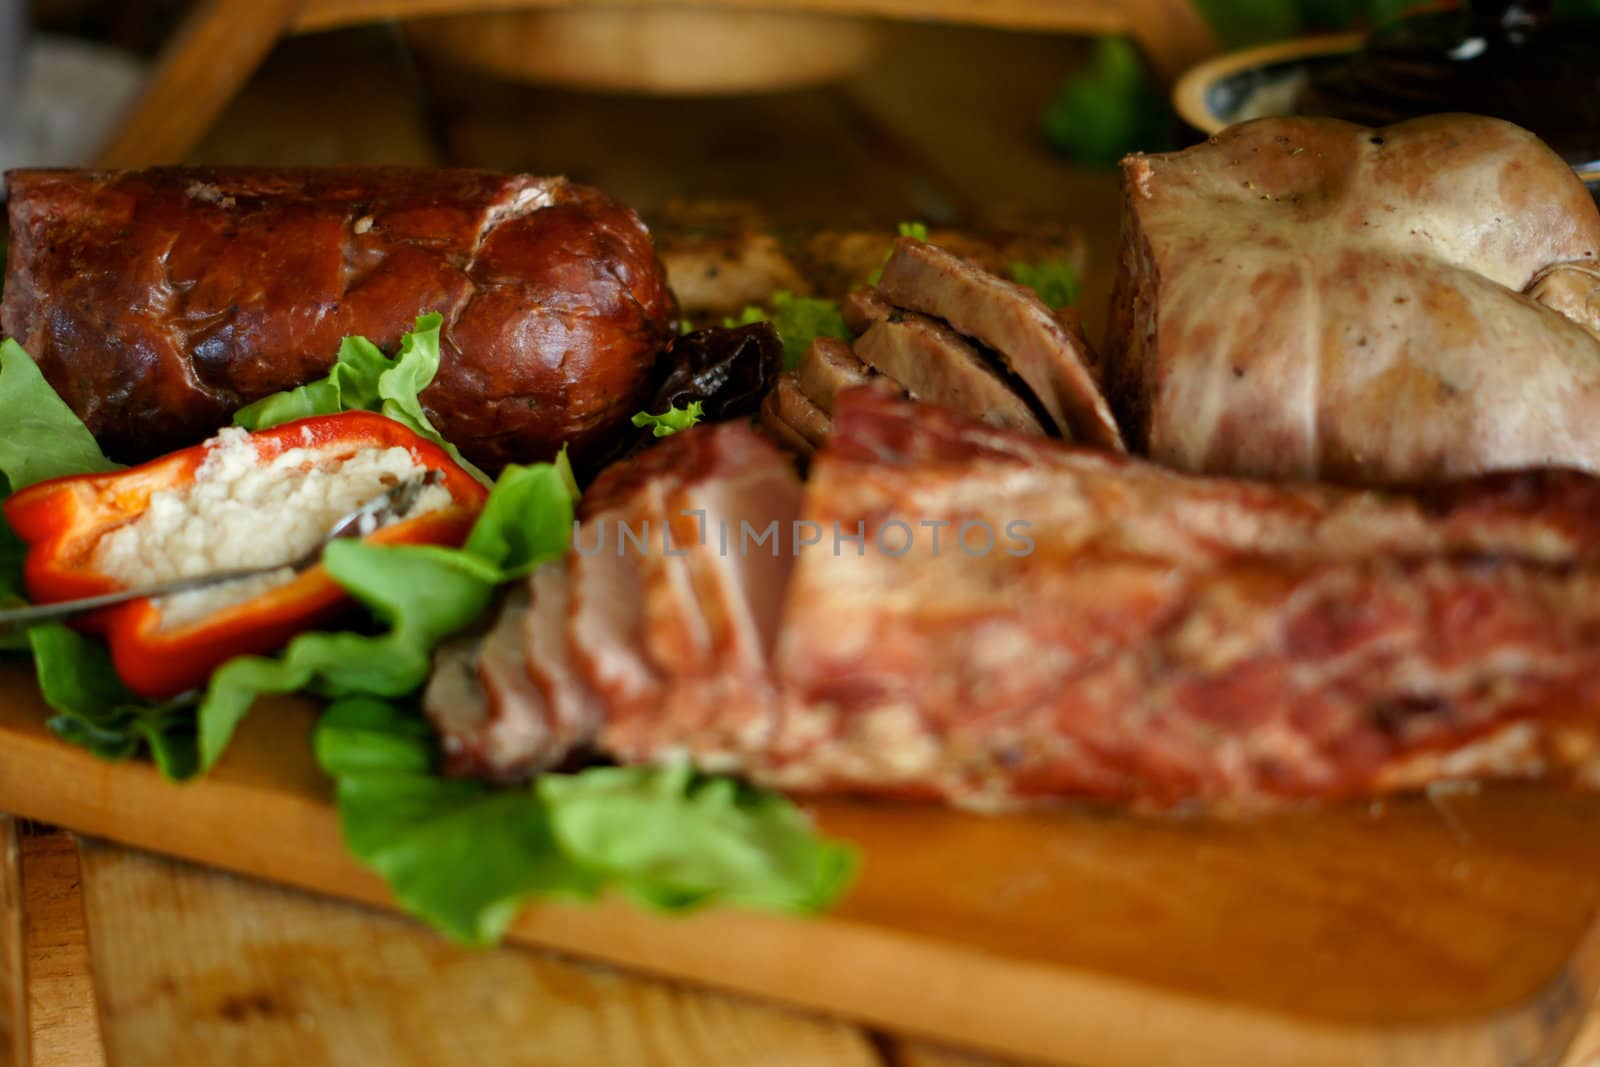 farmhouse table with traditional Polish delicacies. Ham, sausage, bread, etc.